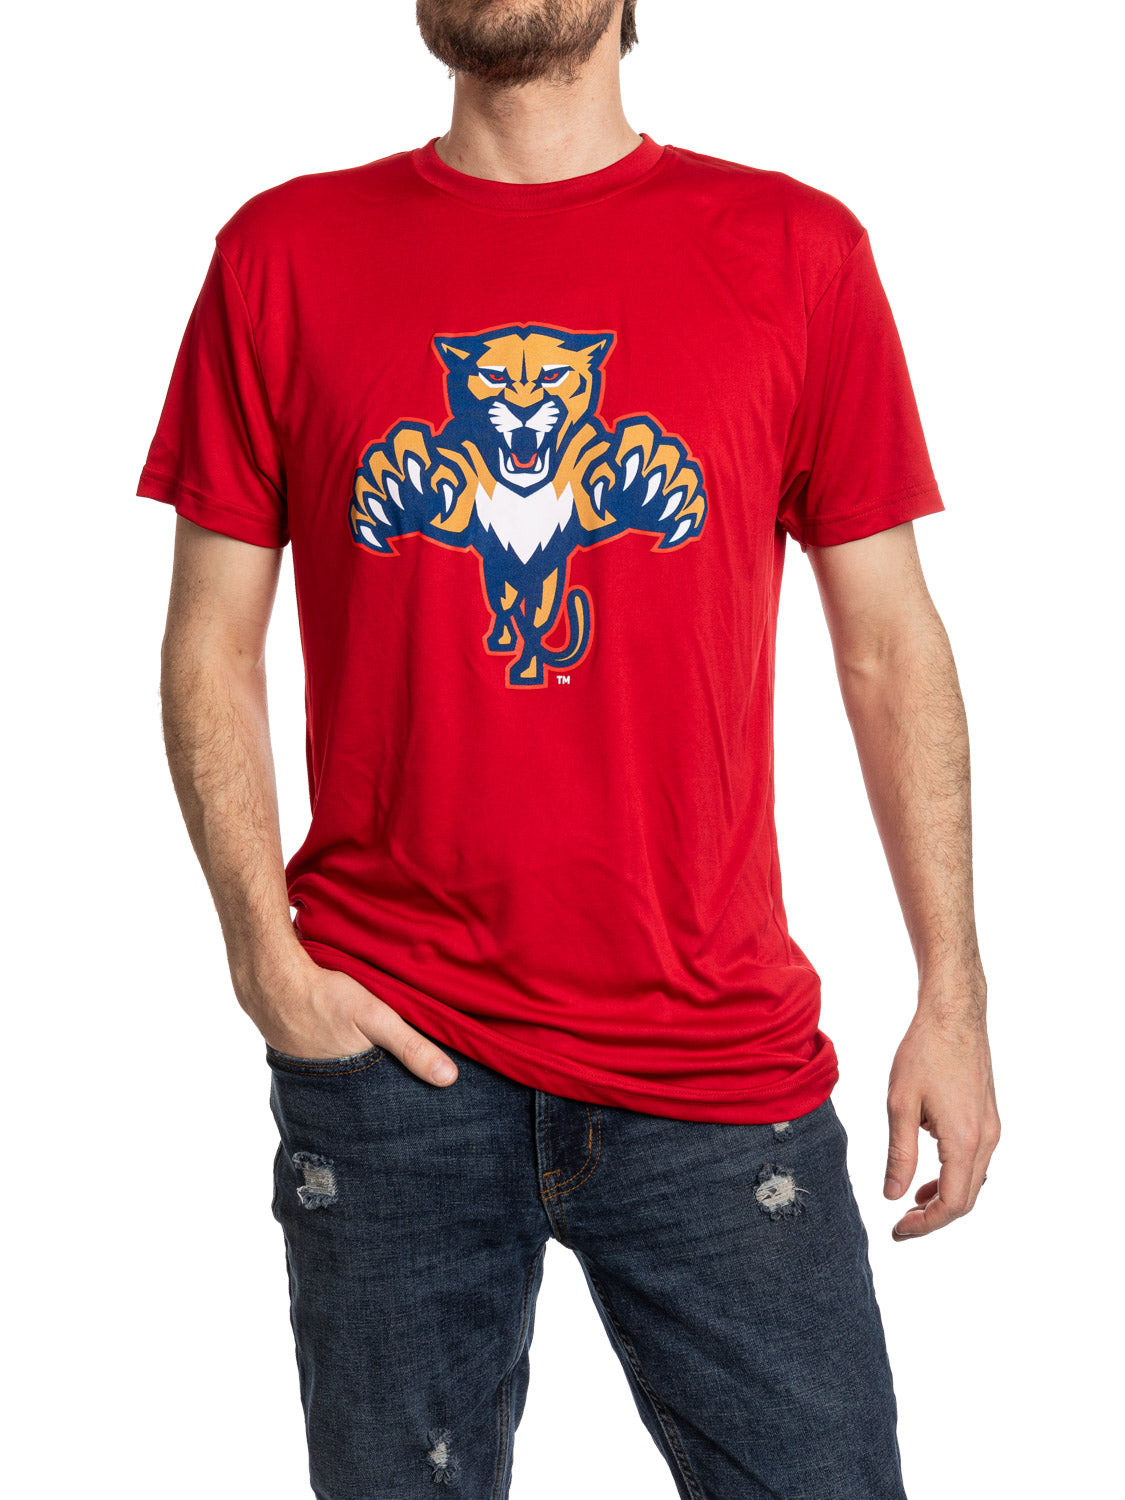 Florida Panthers Short Sleeve Rashguard T Shirt - Alternate Logo